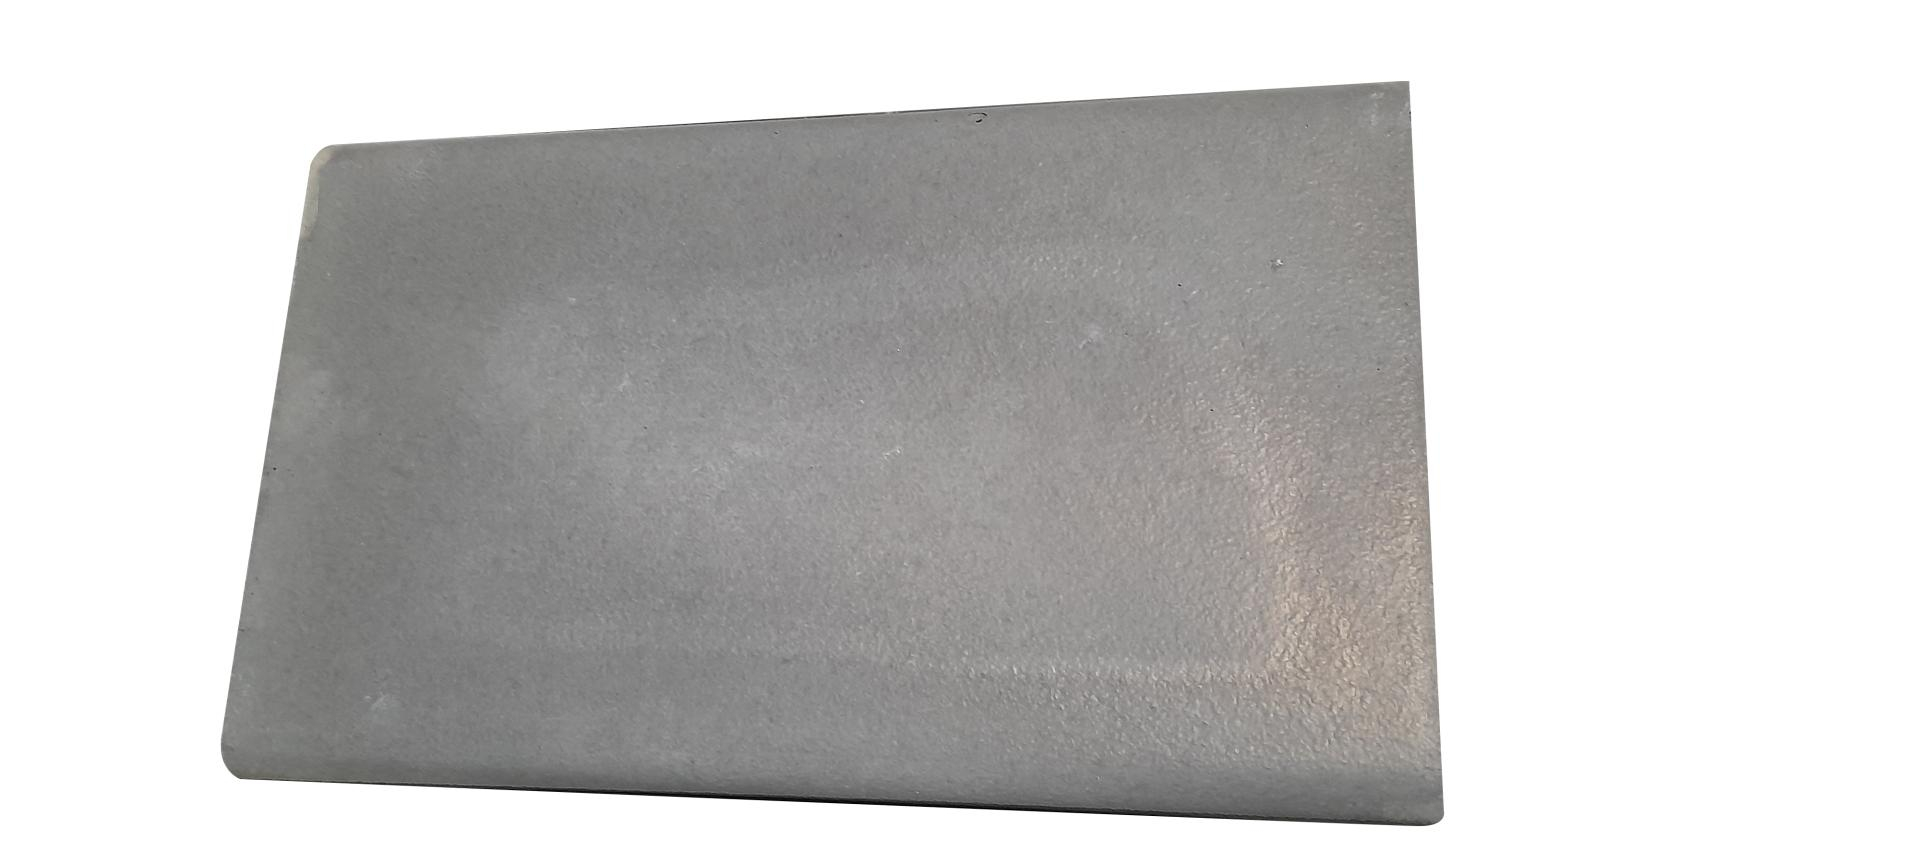 couvertine-elegance-plate-50x30x4cm-anthracite-edycem-0